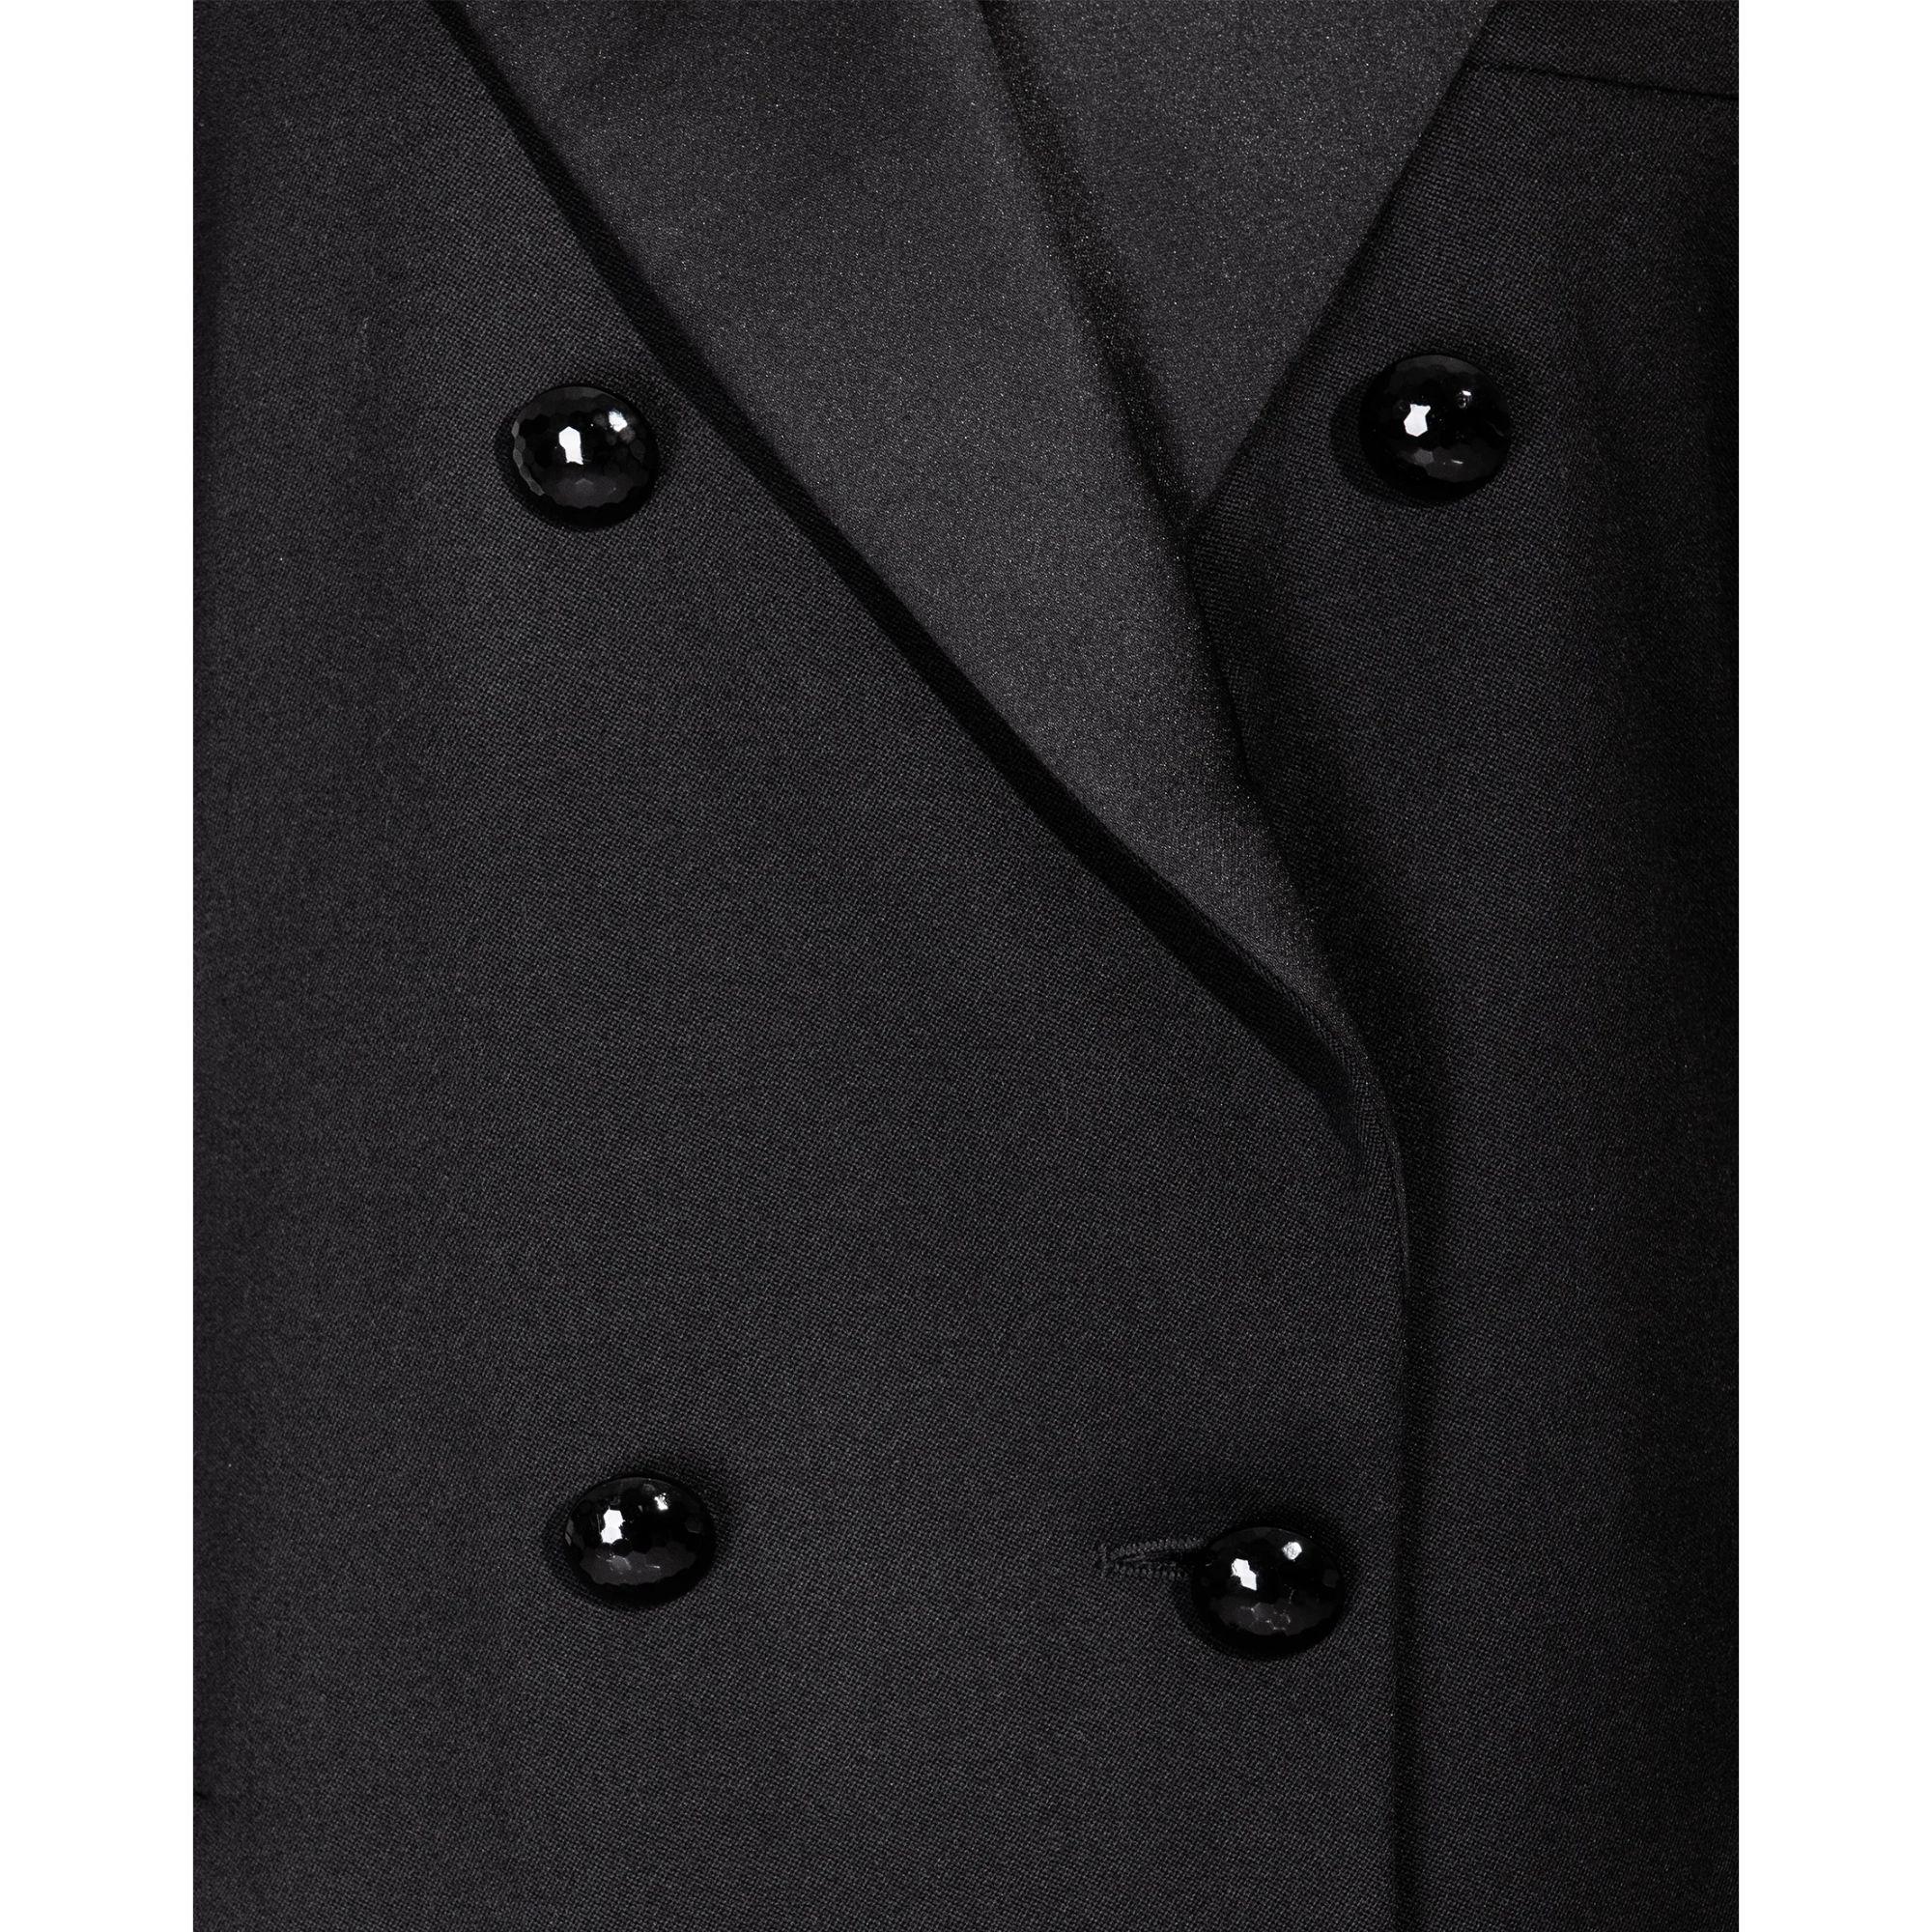 Yves Saint Laurent Rive Gauche Black Tuxedo Dress, 1983 2